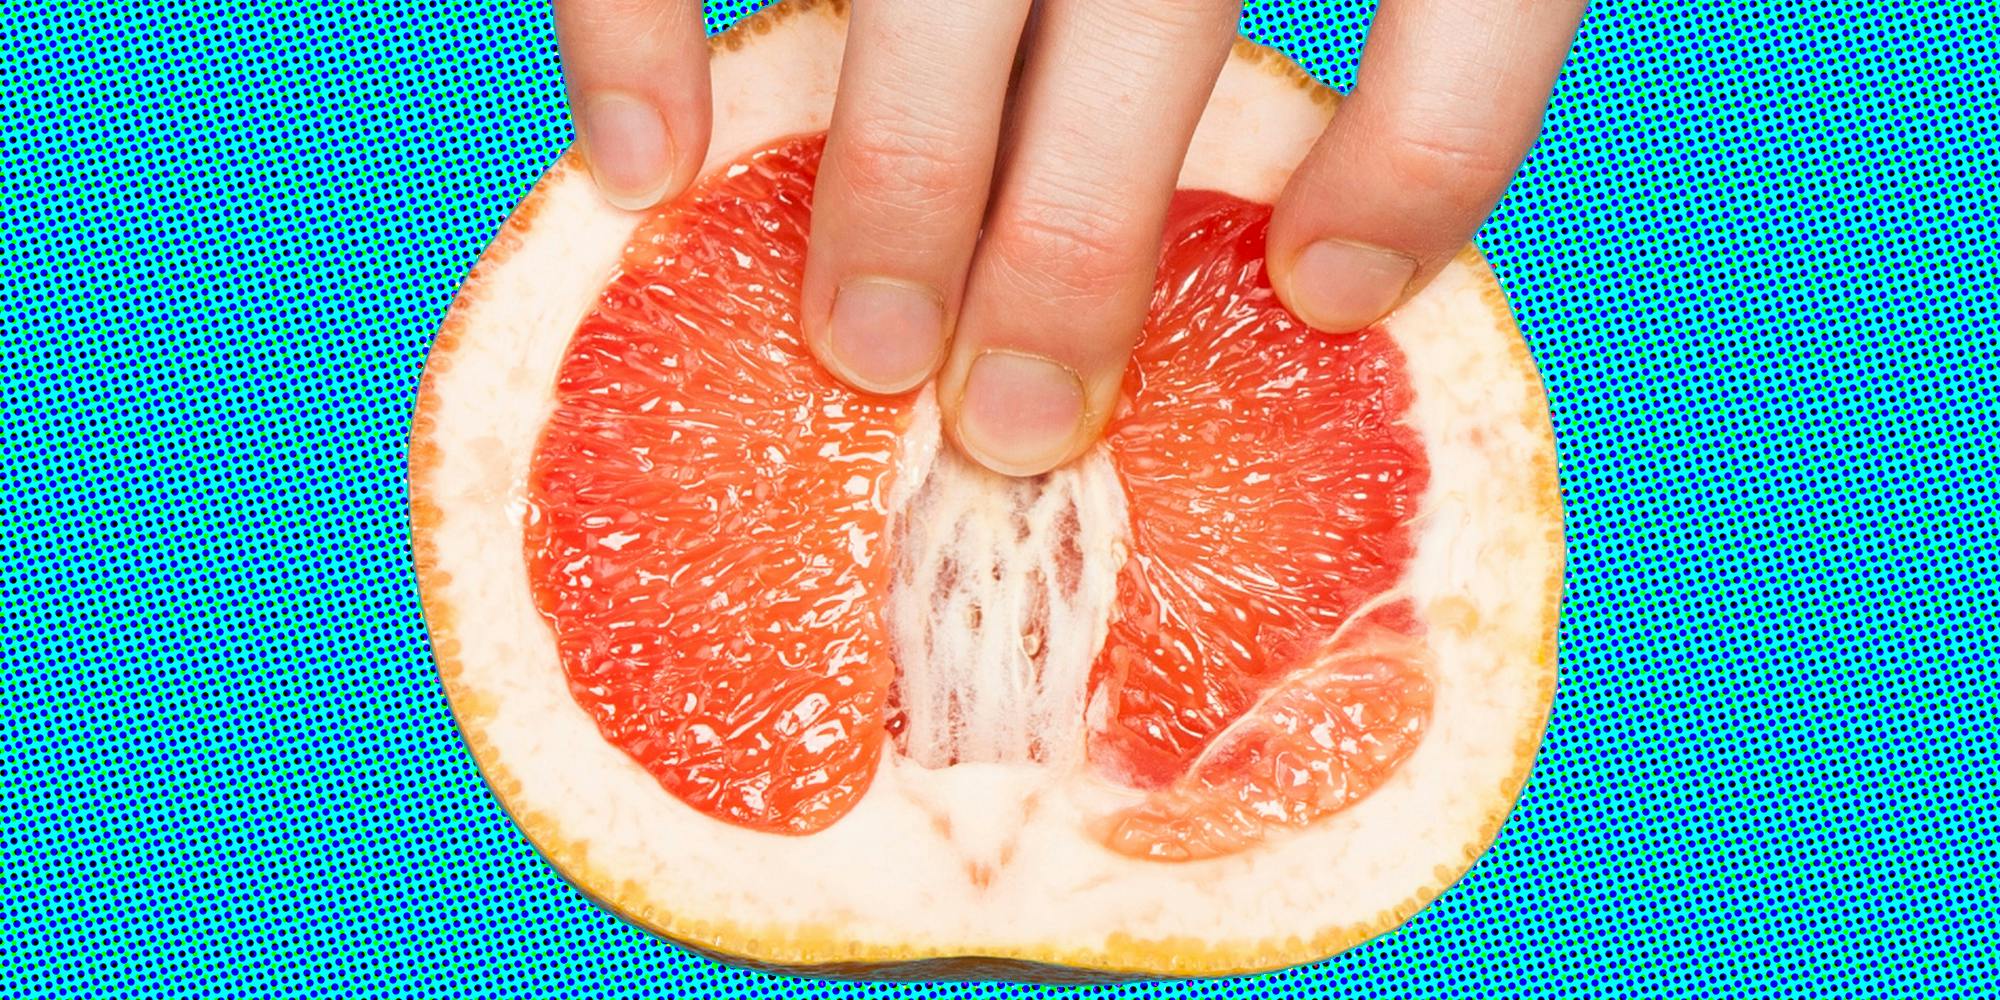 Hand touching grapefruit on blue background